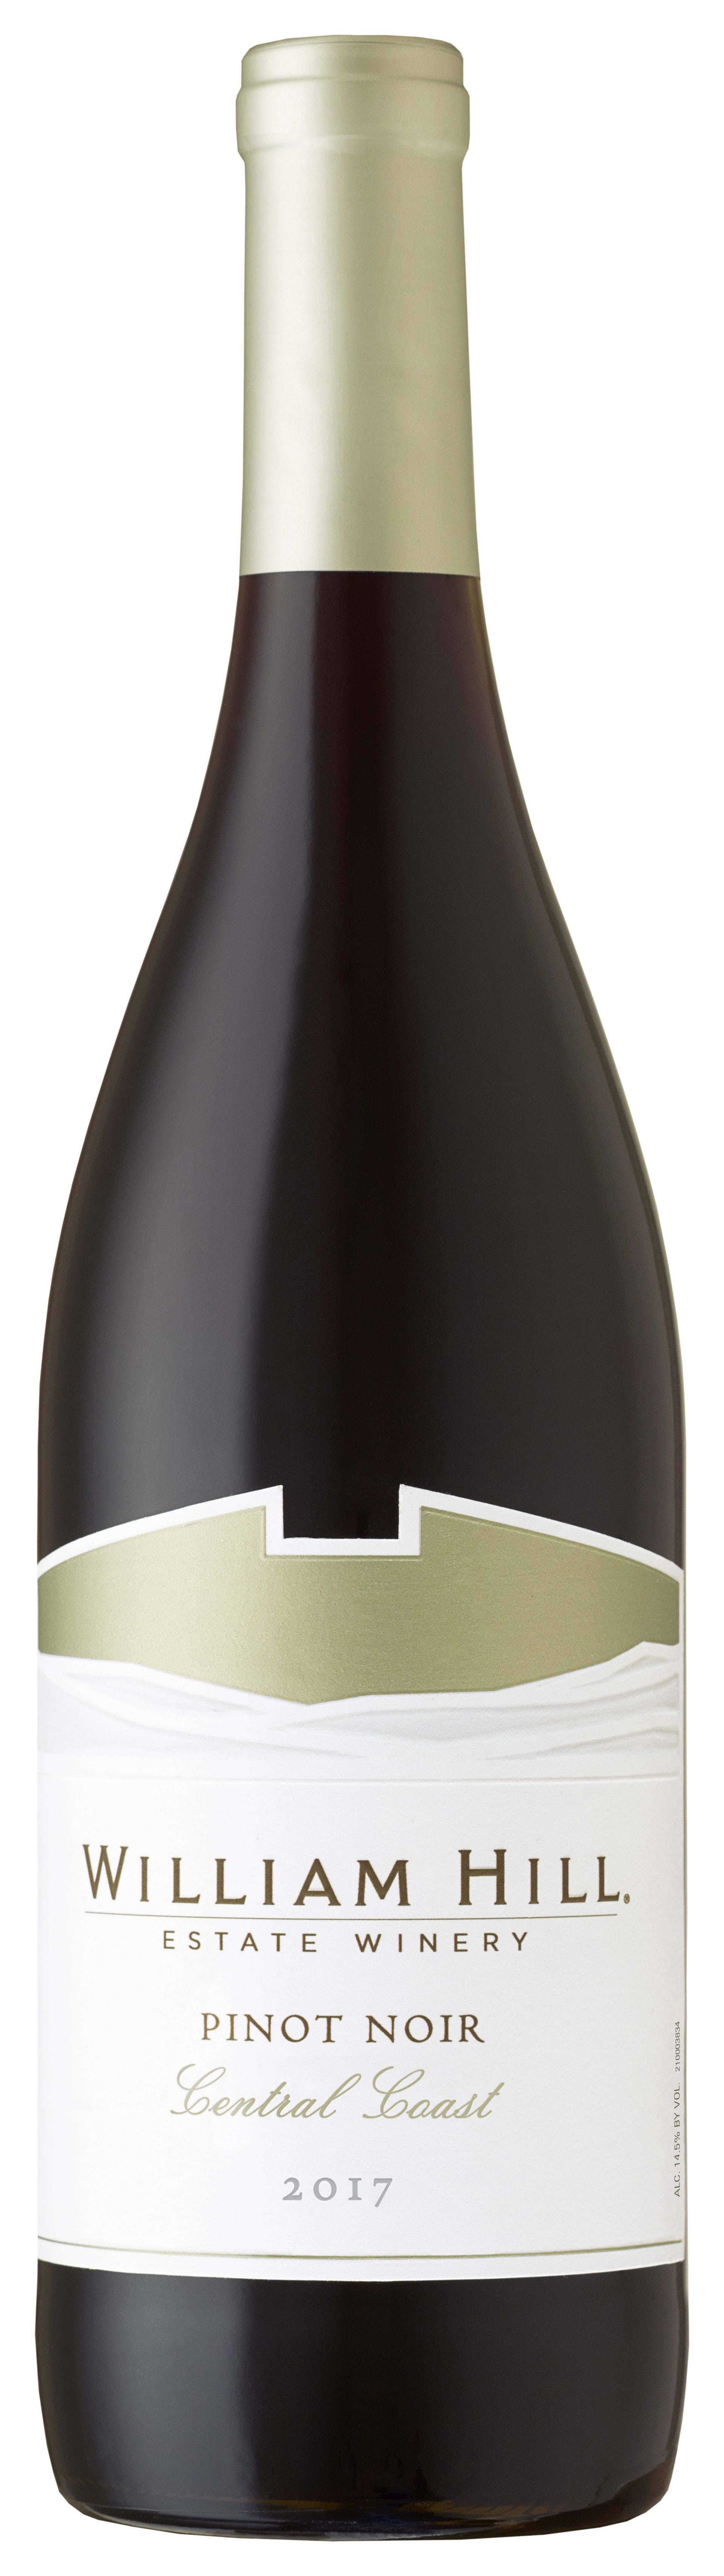 William Hill Pinot Noir, Central Coast, 2013 - 750 ml